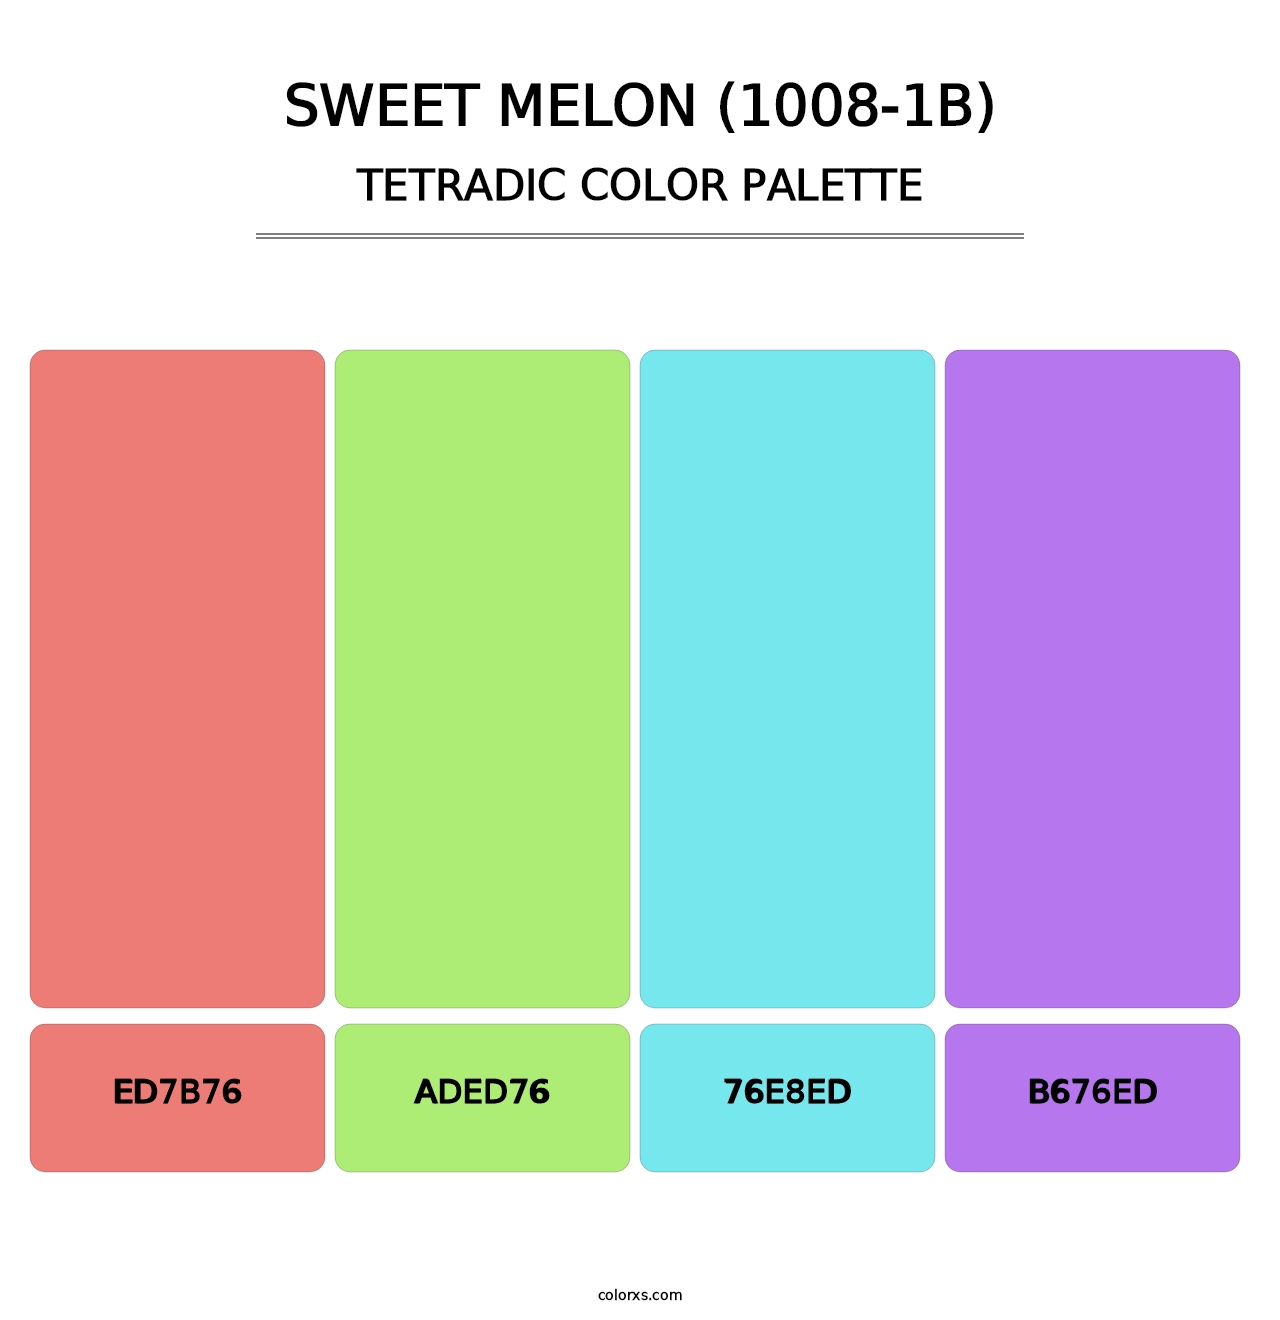 Sweet Melon (1008-1B) - Tetradic Color Palette